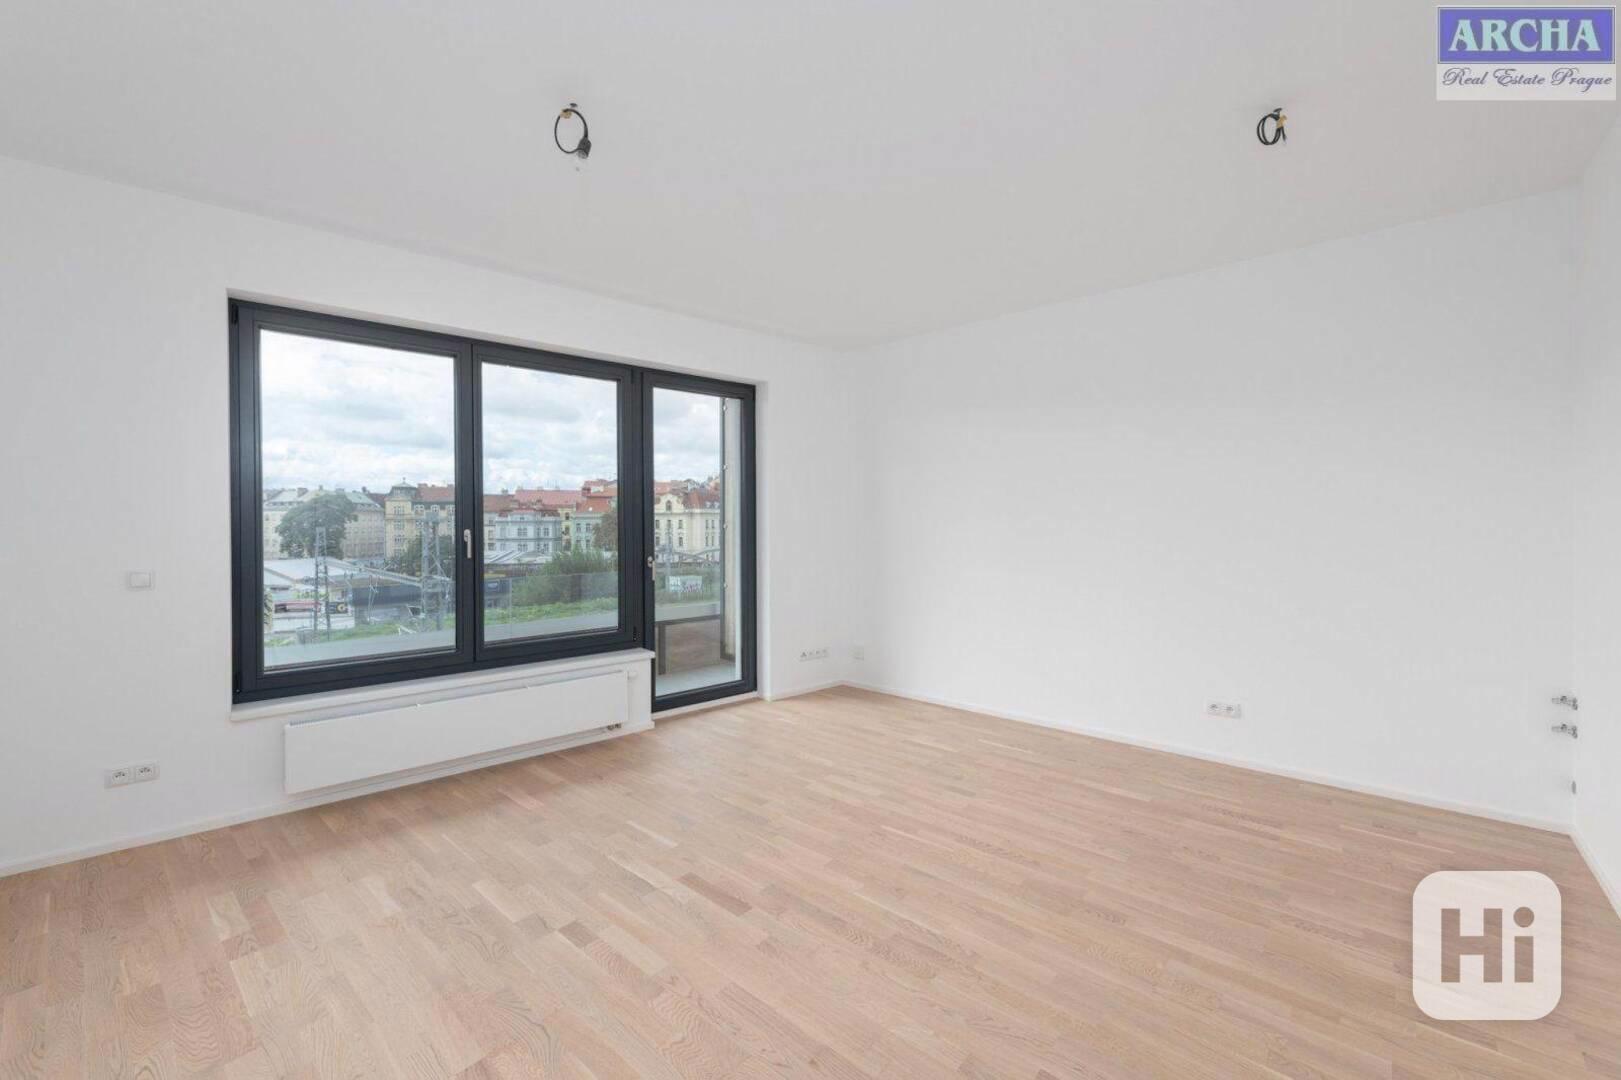 Prodej bytu 1+kk, 35,3 m2, balkon, 3.NP,  Praha 2 Vinohrady - foto 1